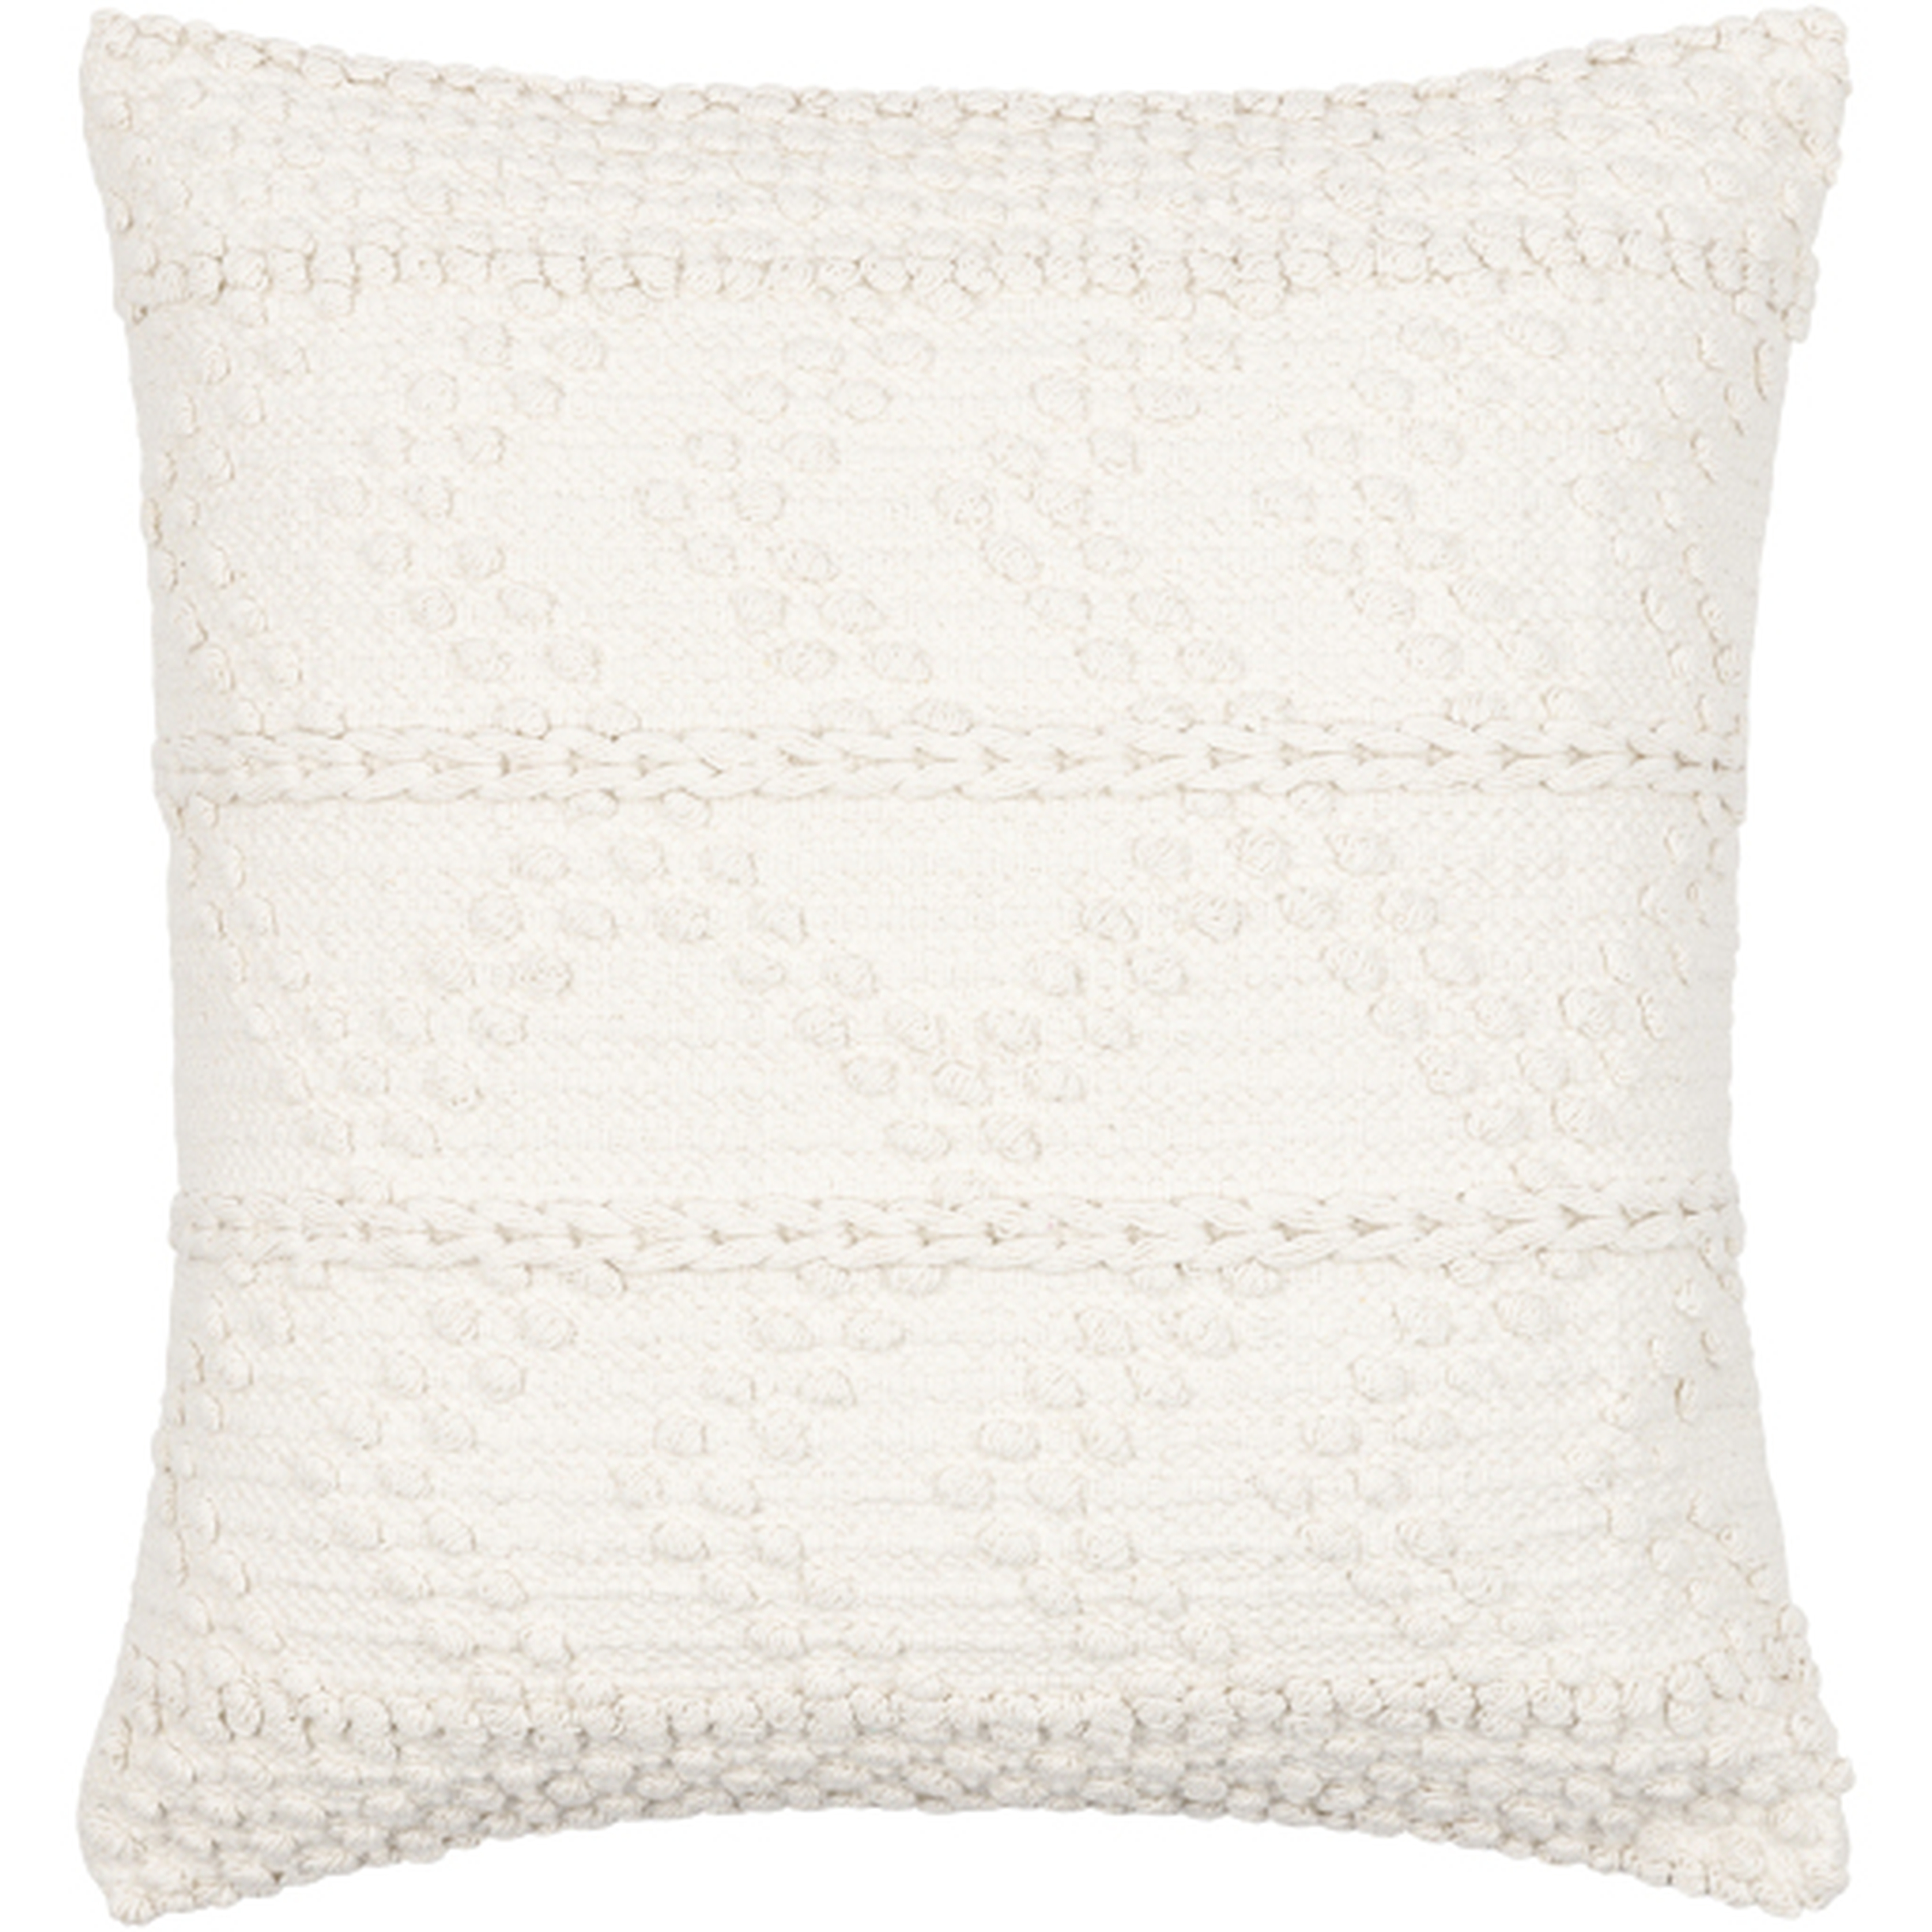 Merdo Throw Pillow, 20" x 20", pillow cover only - Surya